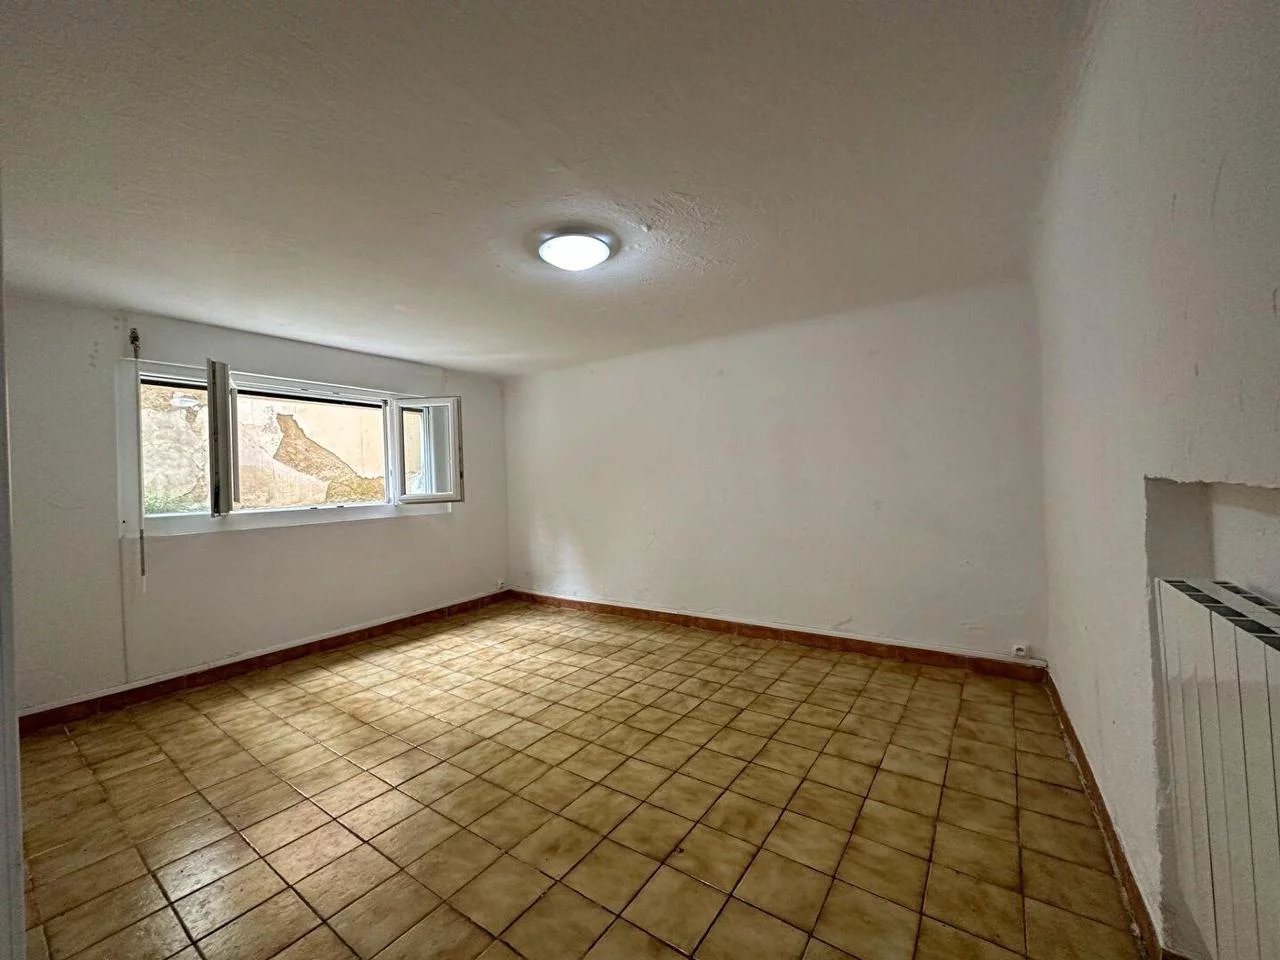 Appartement  1 Locali 23.81m2  In vendita    79 000 €